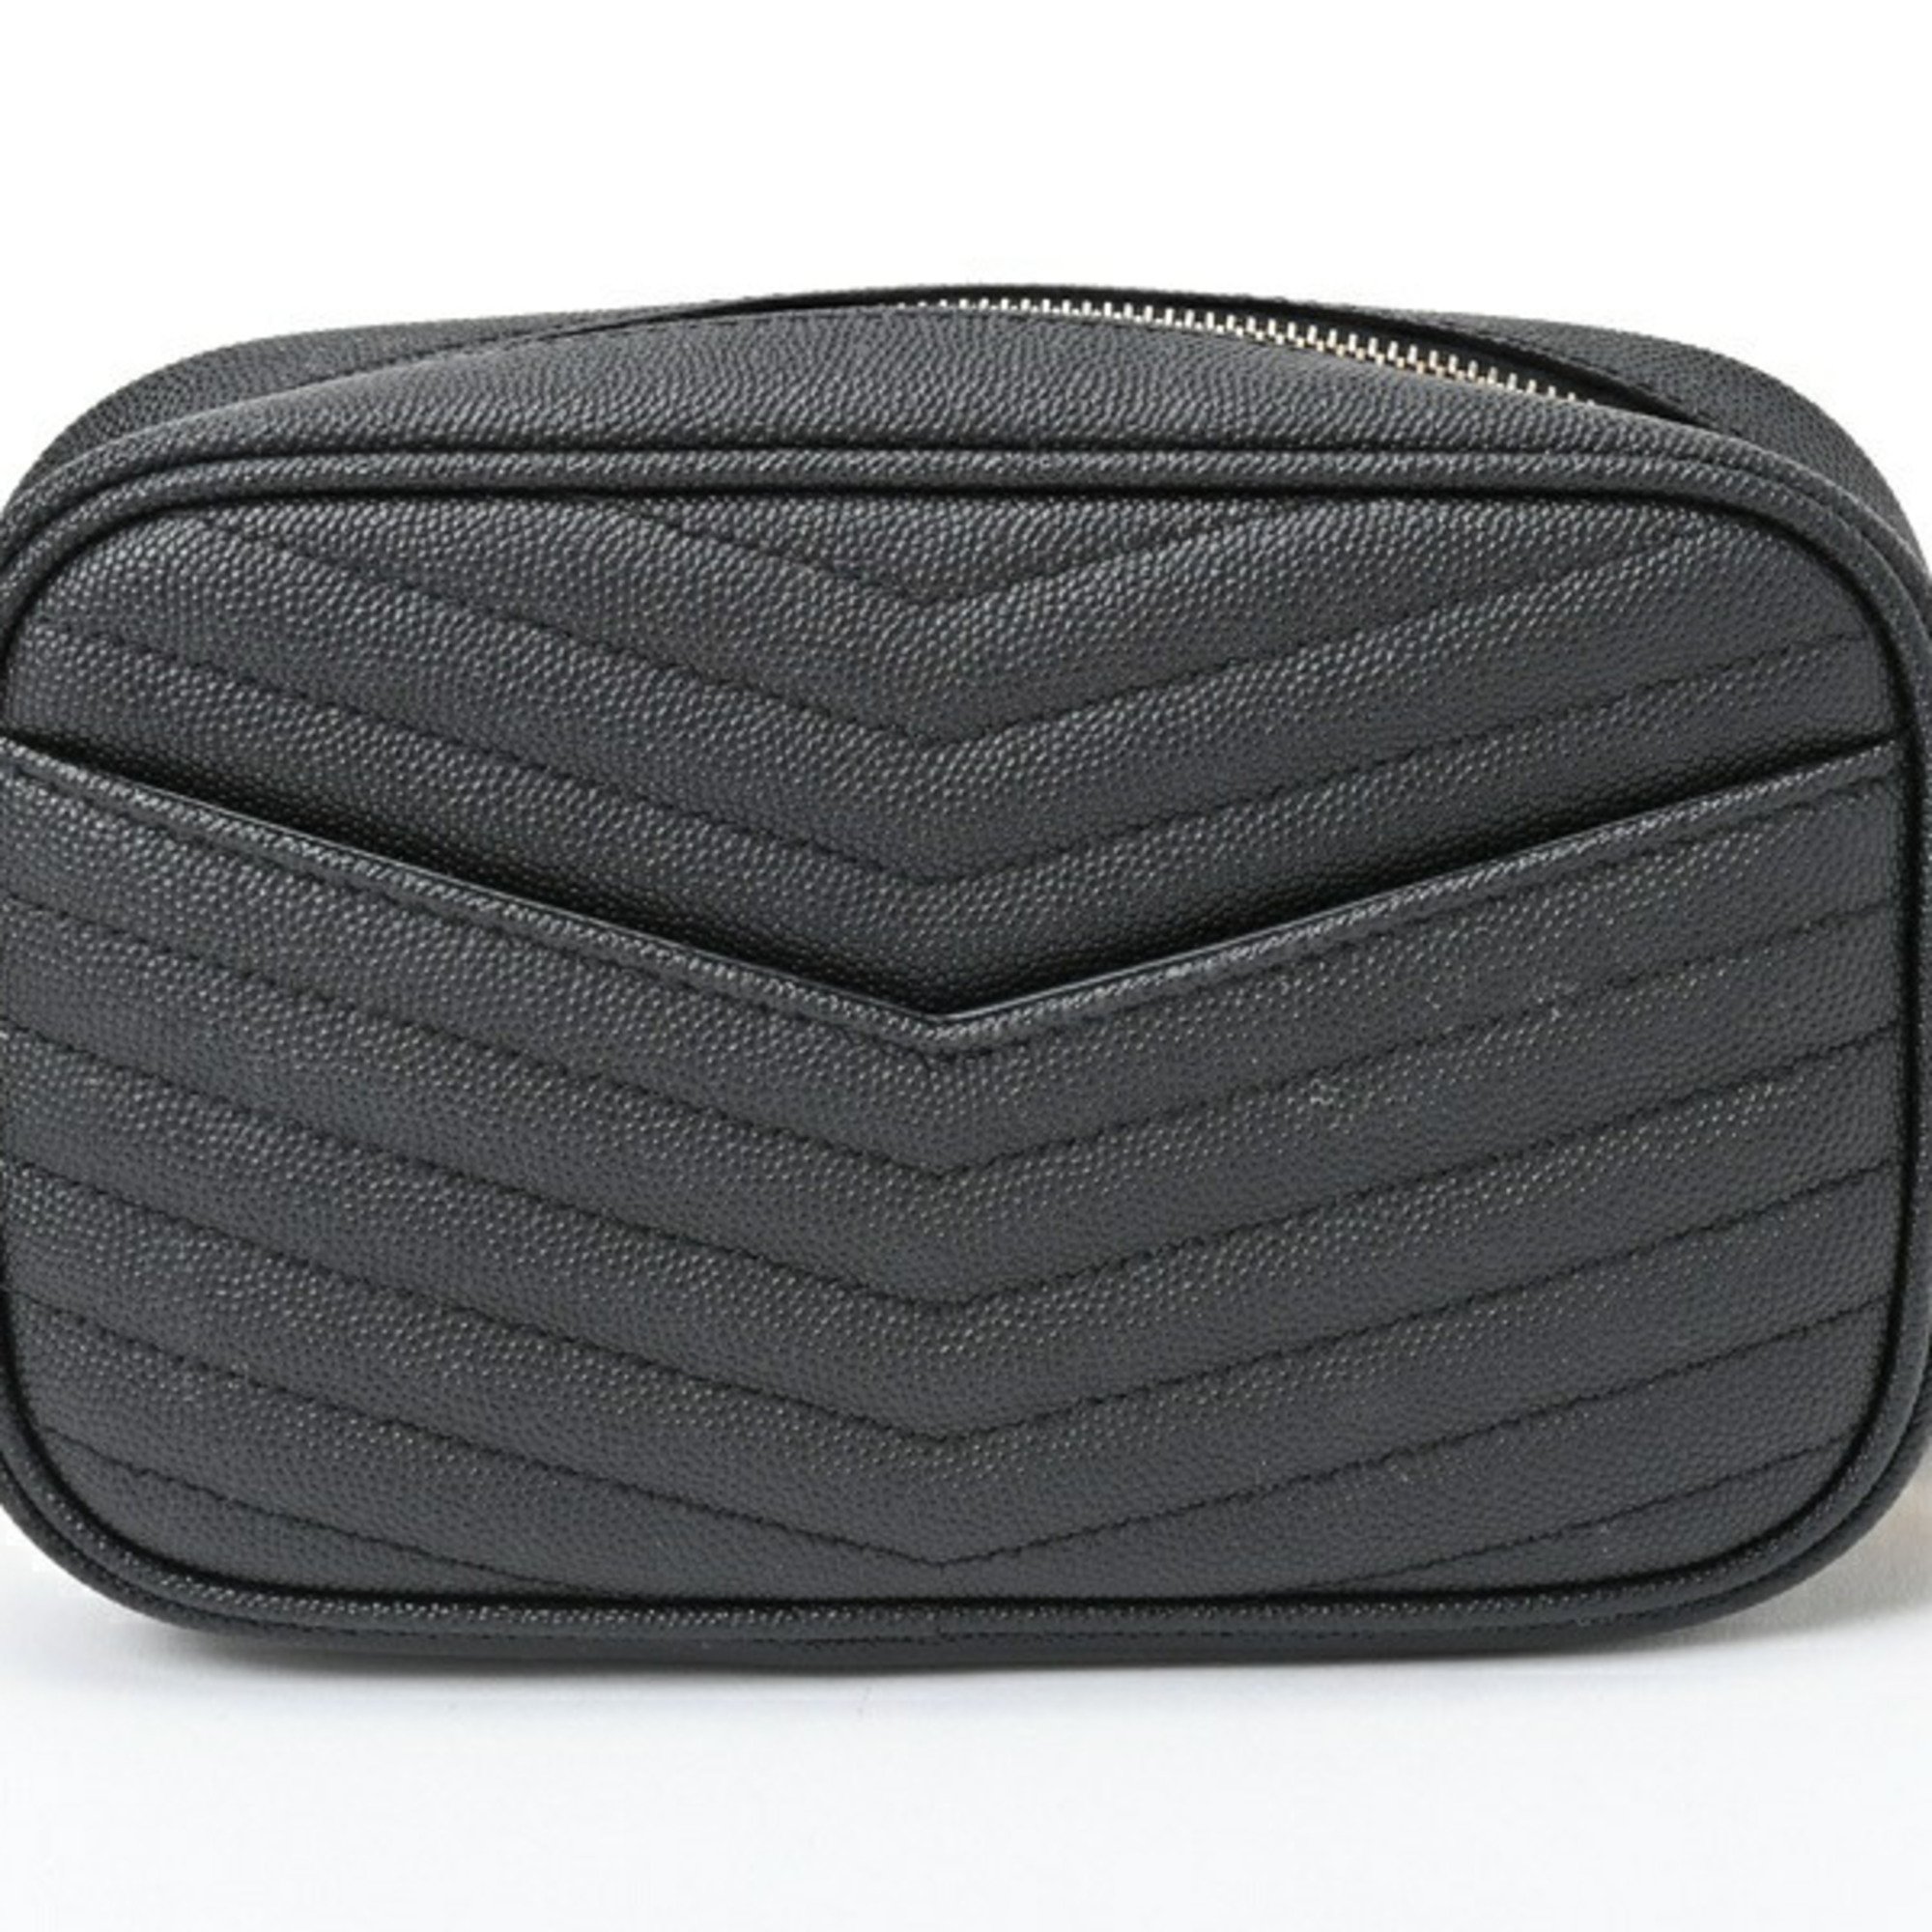 Saint Laurent Lou Bag Chain Shoulder 612579 Quilted Leather Black S-155937